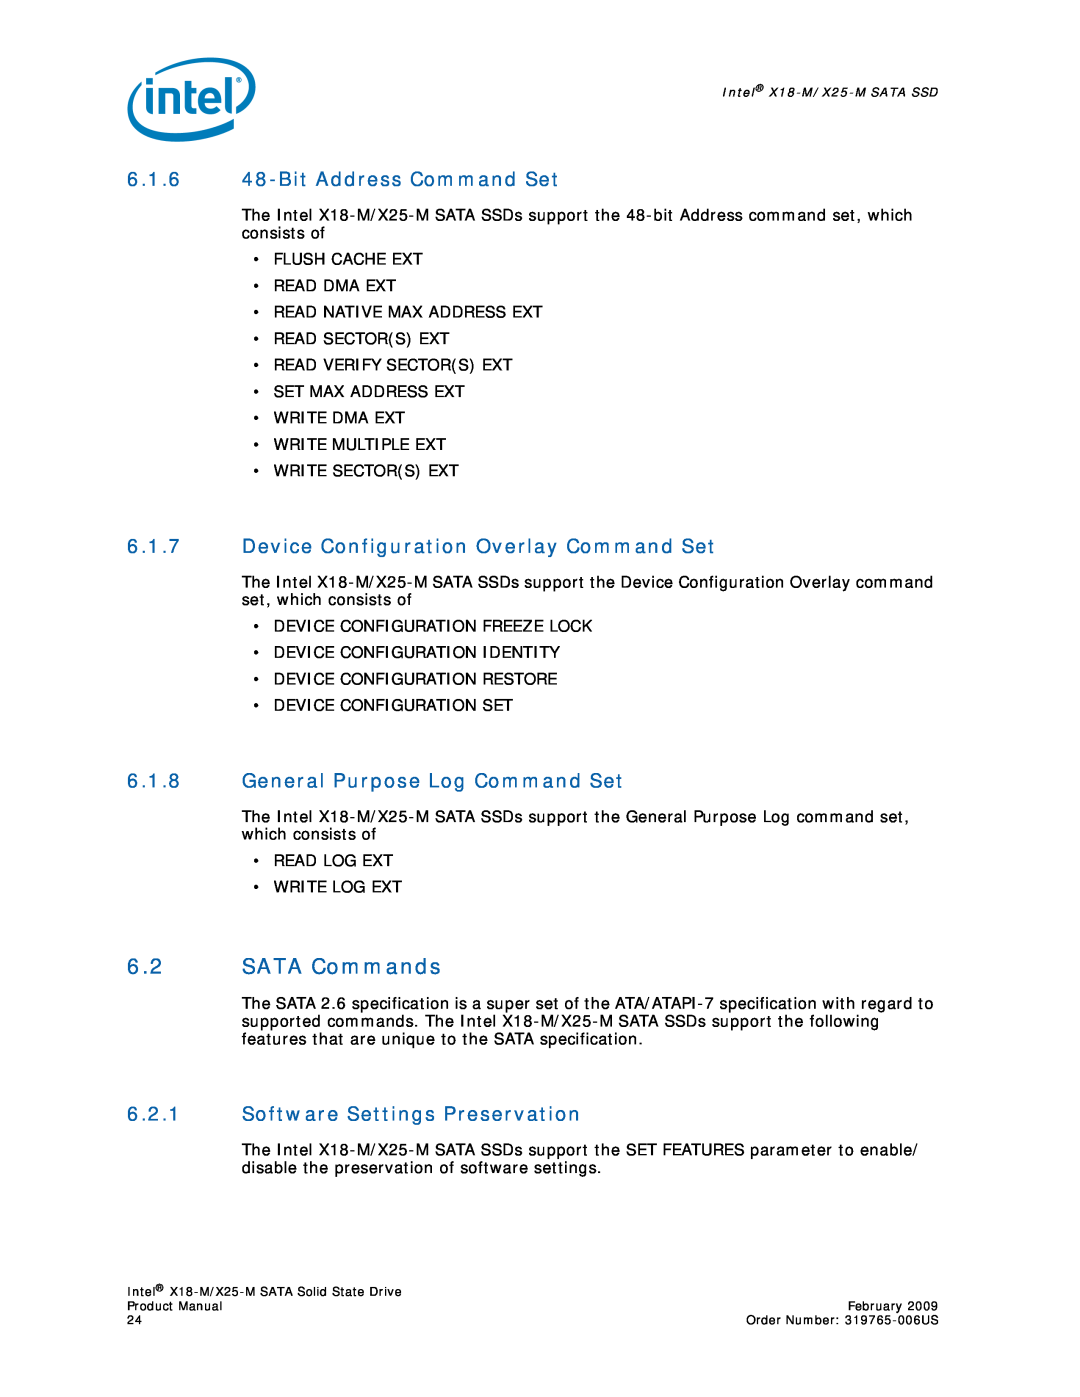 Intel X18-M, X25-M specifications 6.2SATA Commands, BitAddress Command Set, 6.1.7Device Configuration Overlay Command Set 